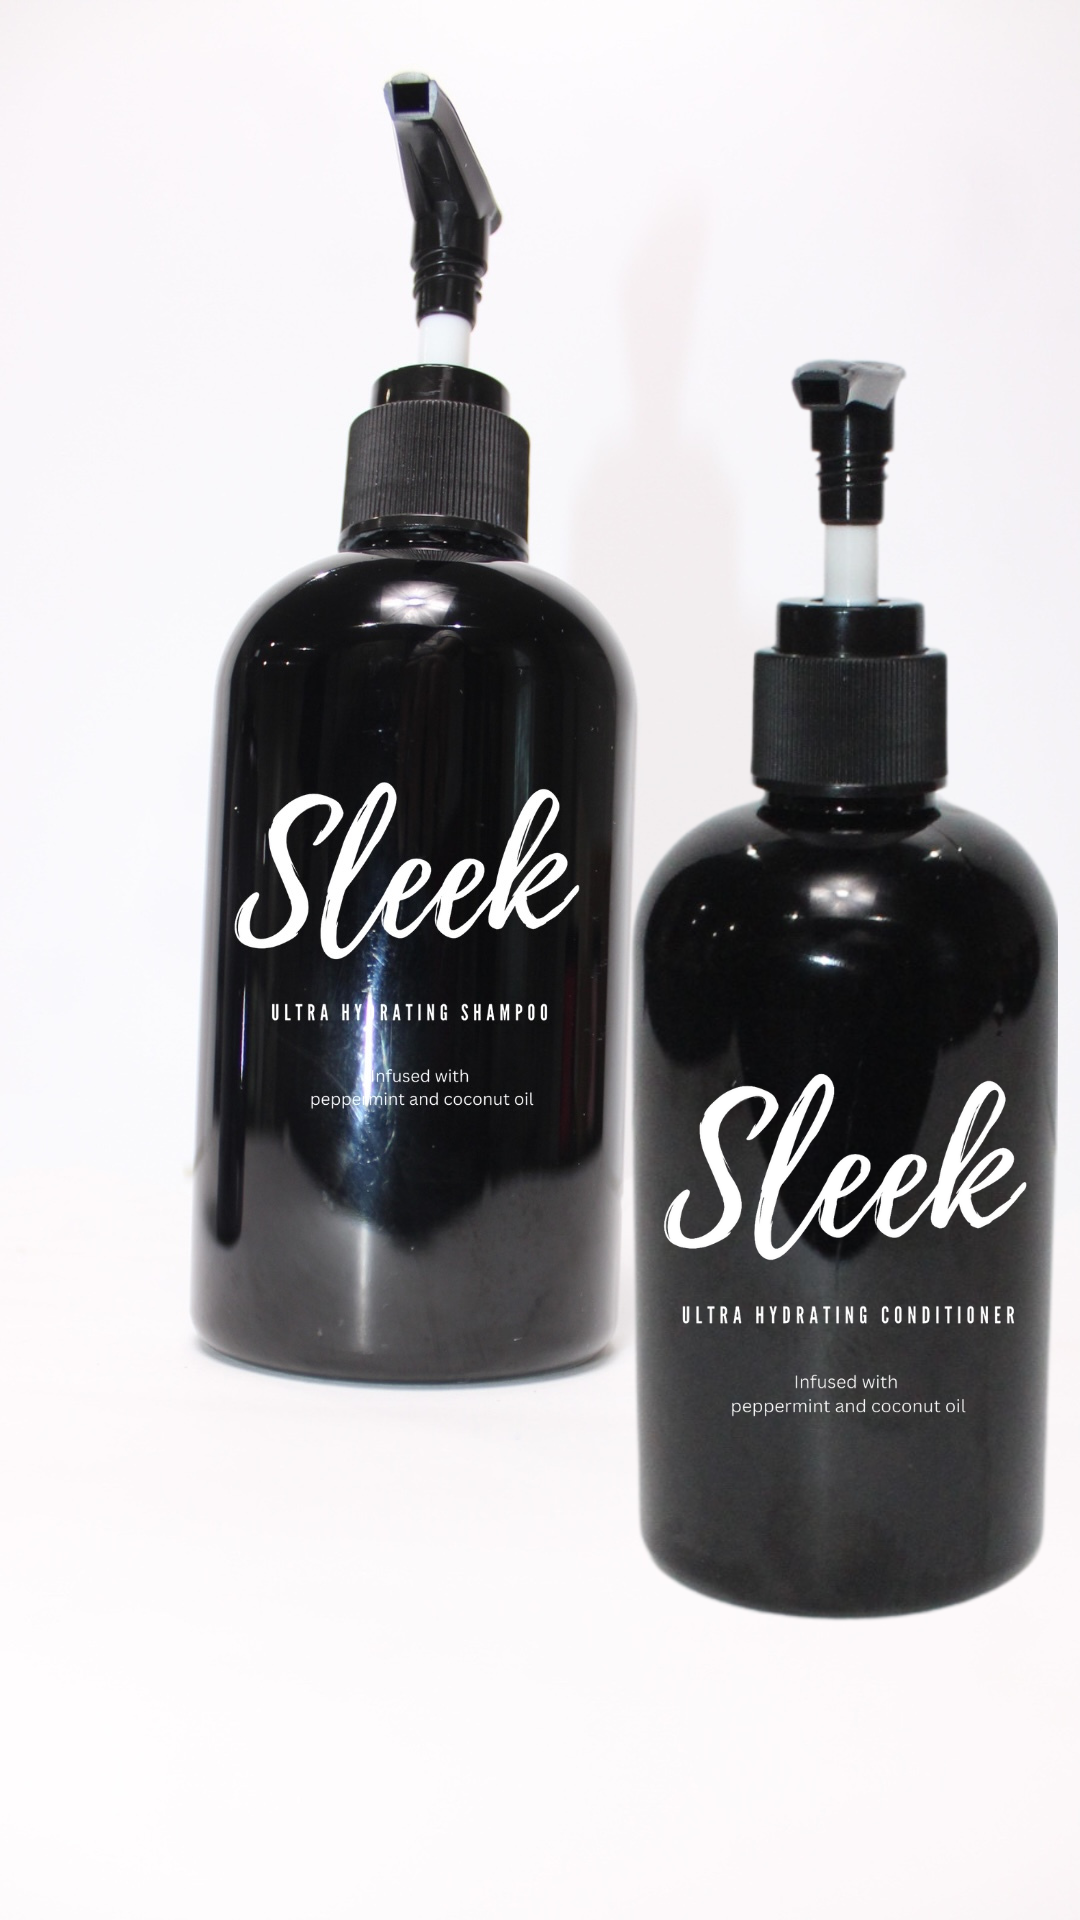 Sleek Ultra Hydrating Shampoo and Conditioner